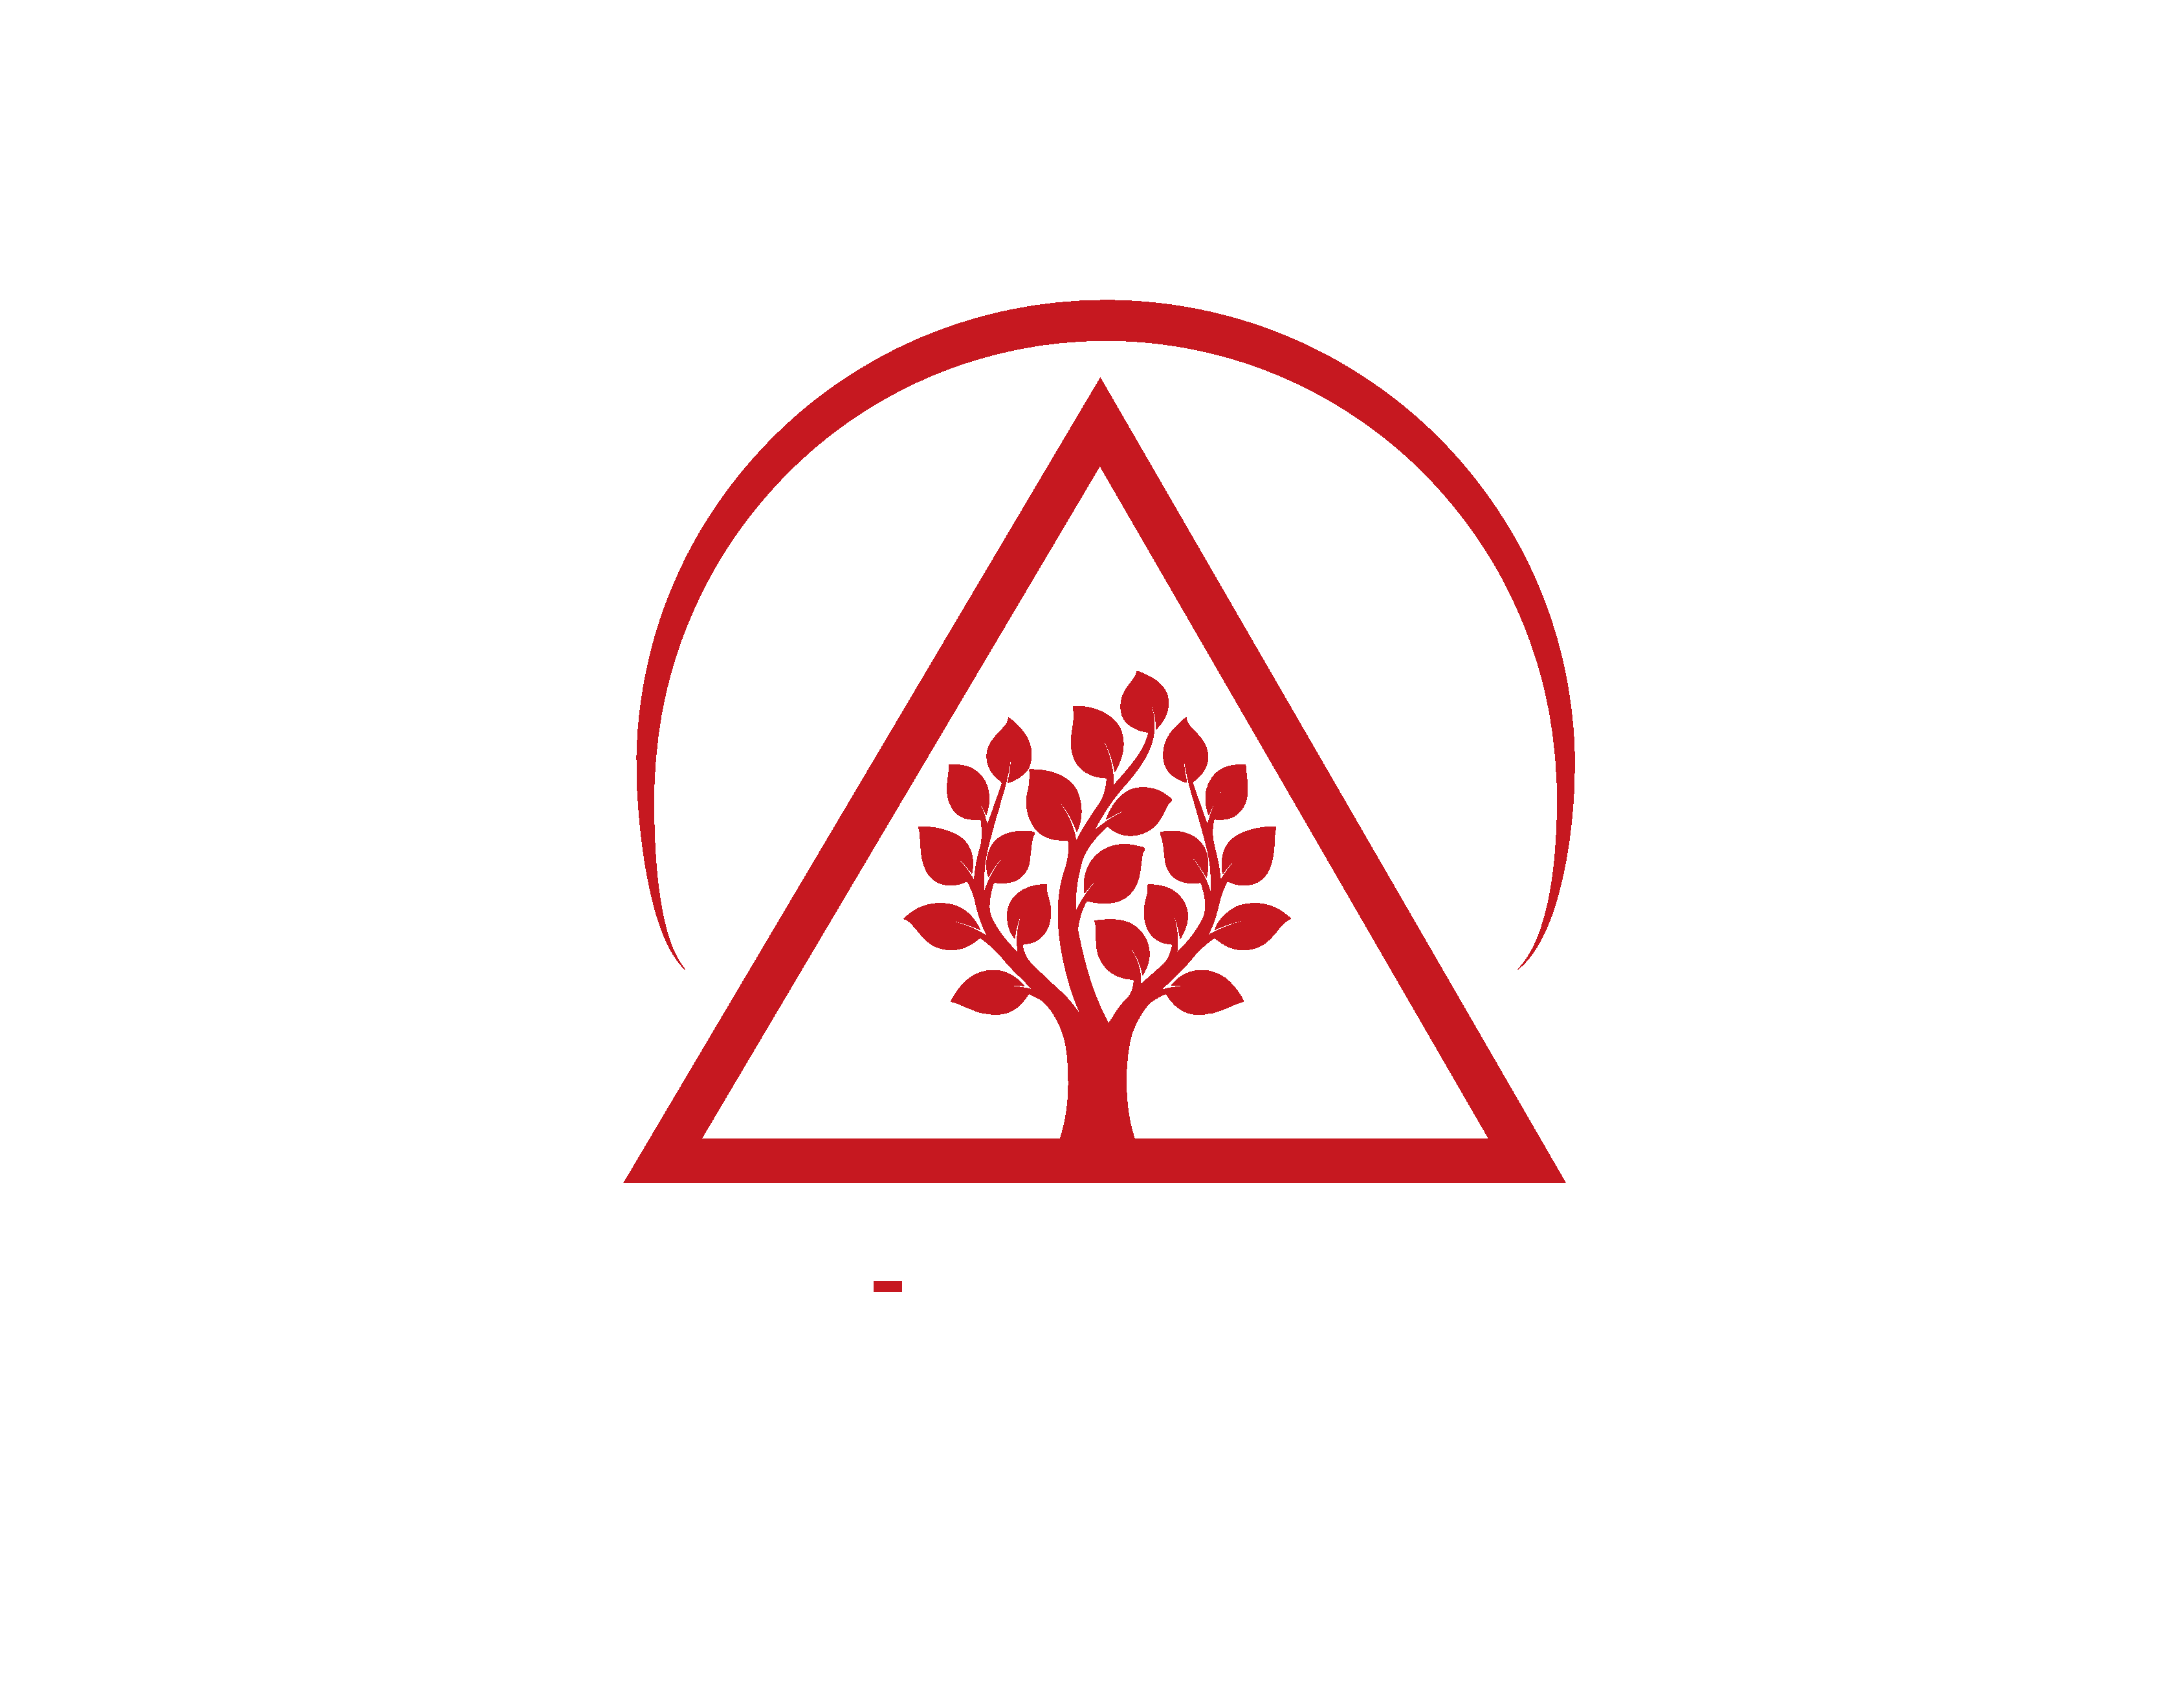 U.S. Multi-Specialty Group